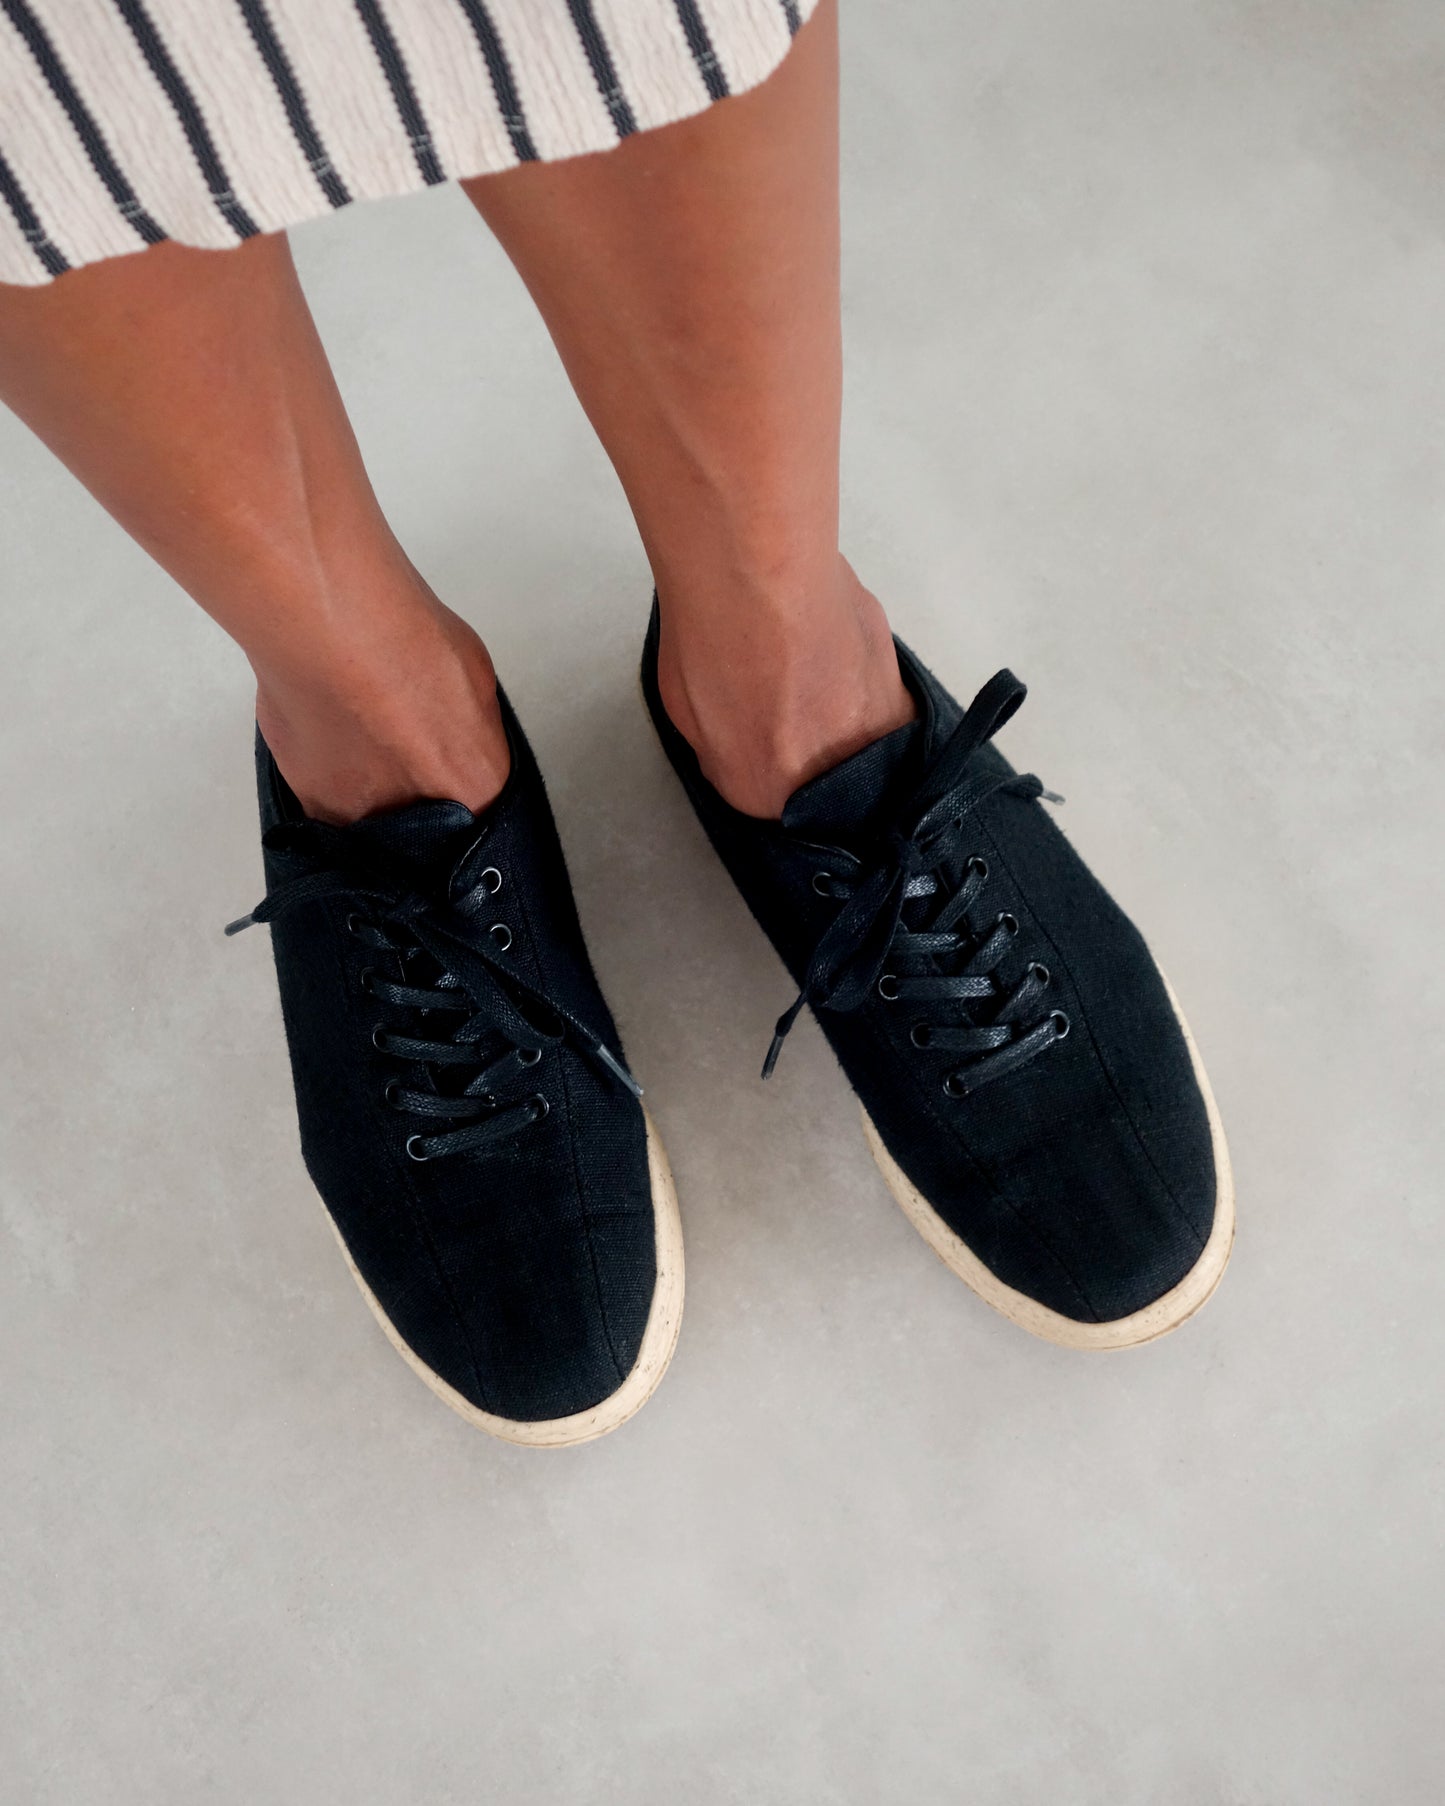 Tennis Shoes No. 1 | Hemp Black